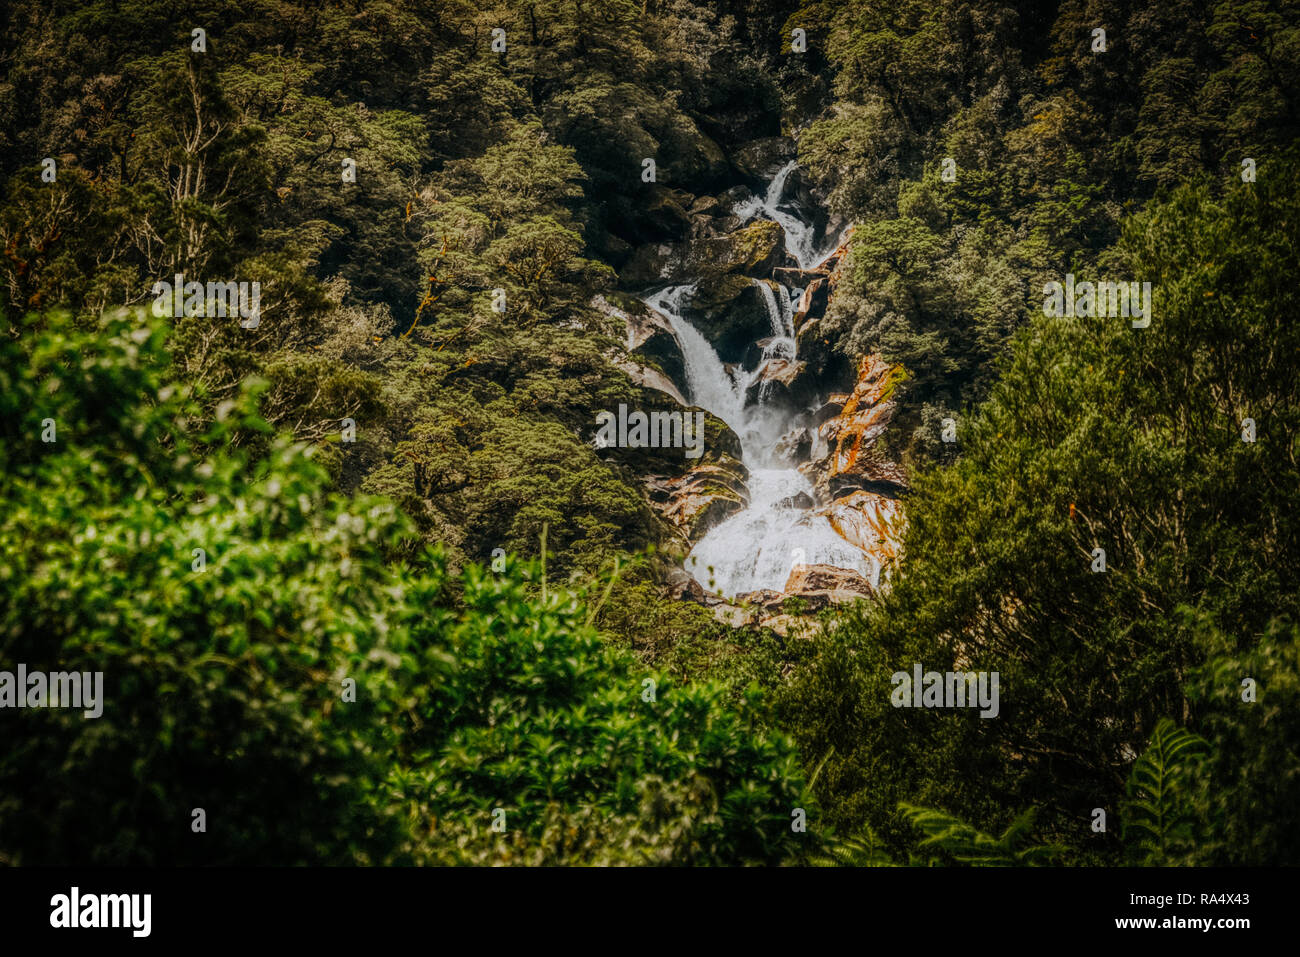 Waterfall hidden in forest, Roaring Billy Falls cascade waterfall among green foliage. National Park, New Zealand Stock Photo